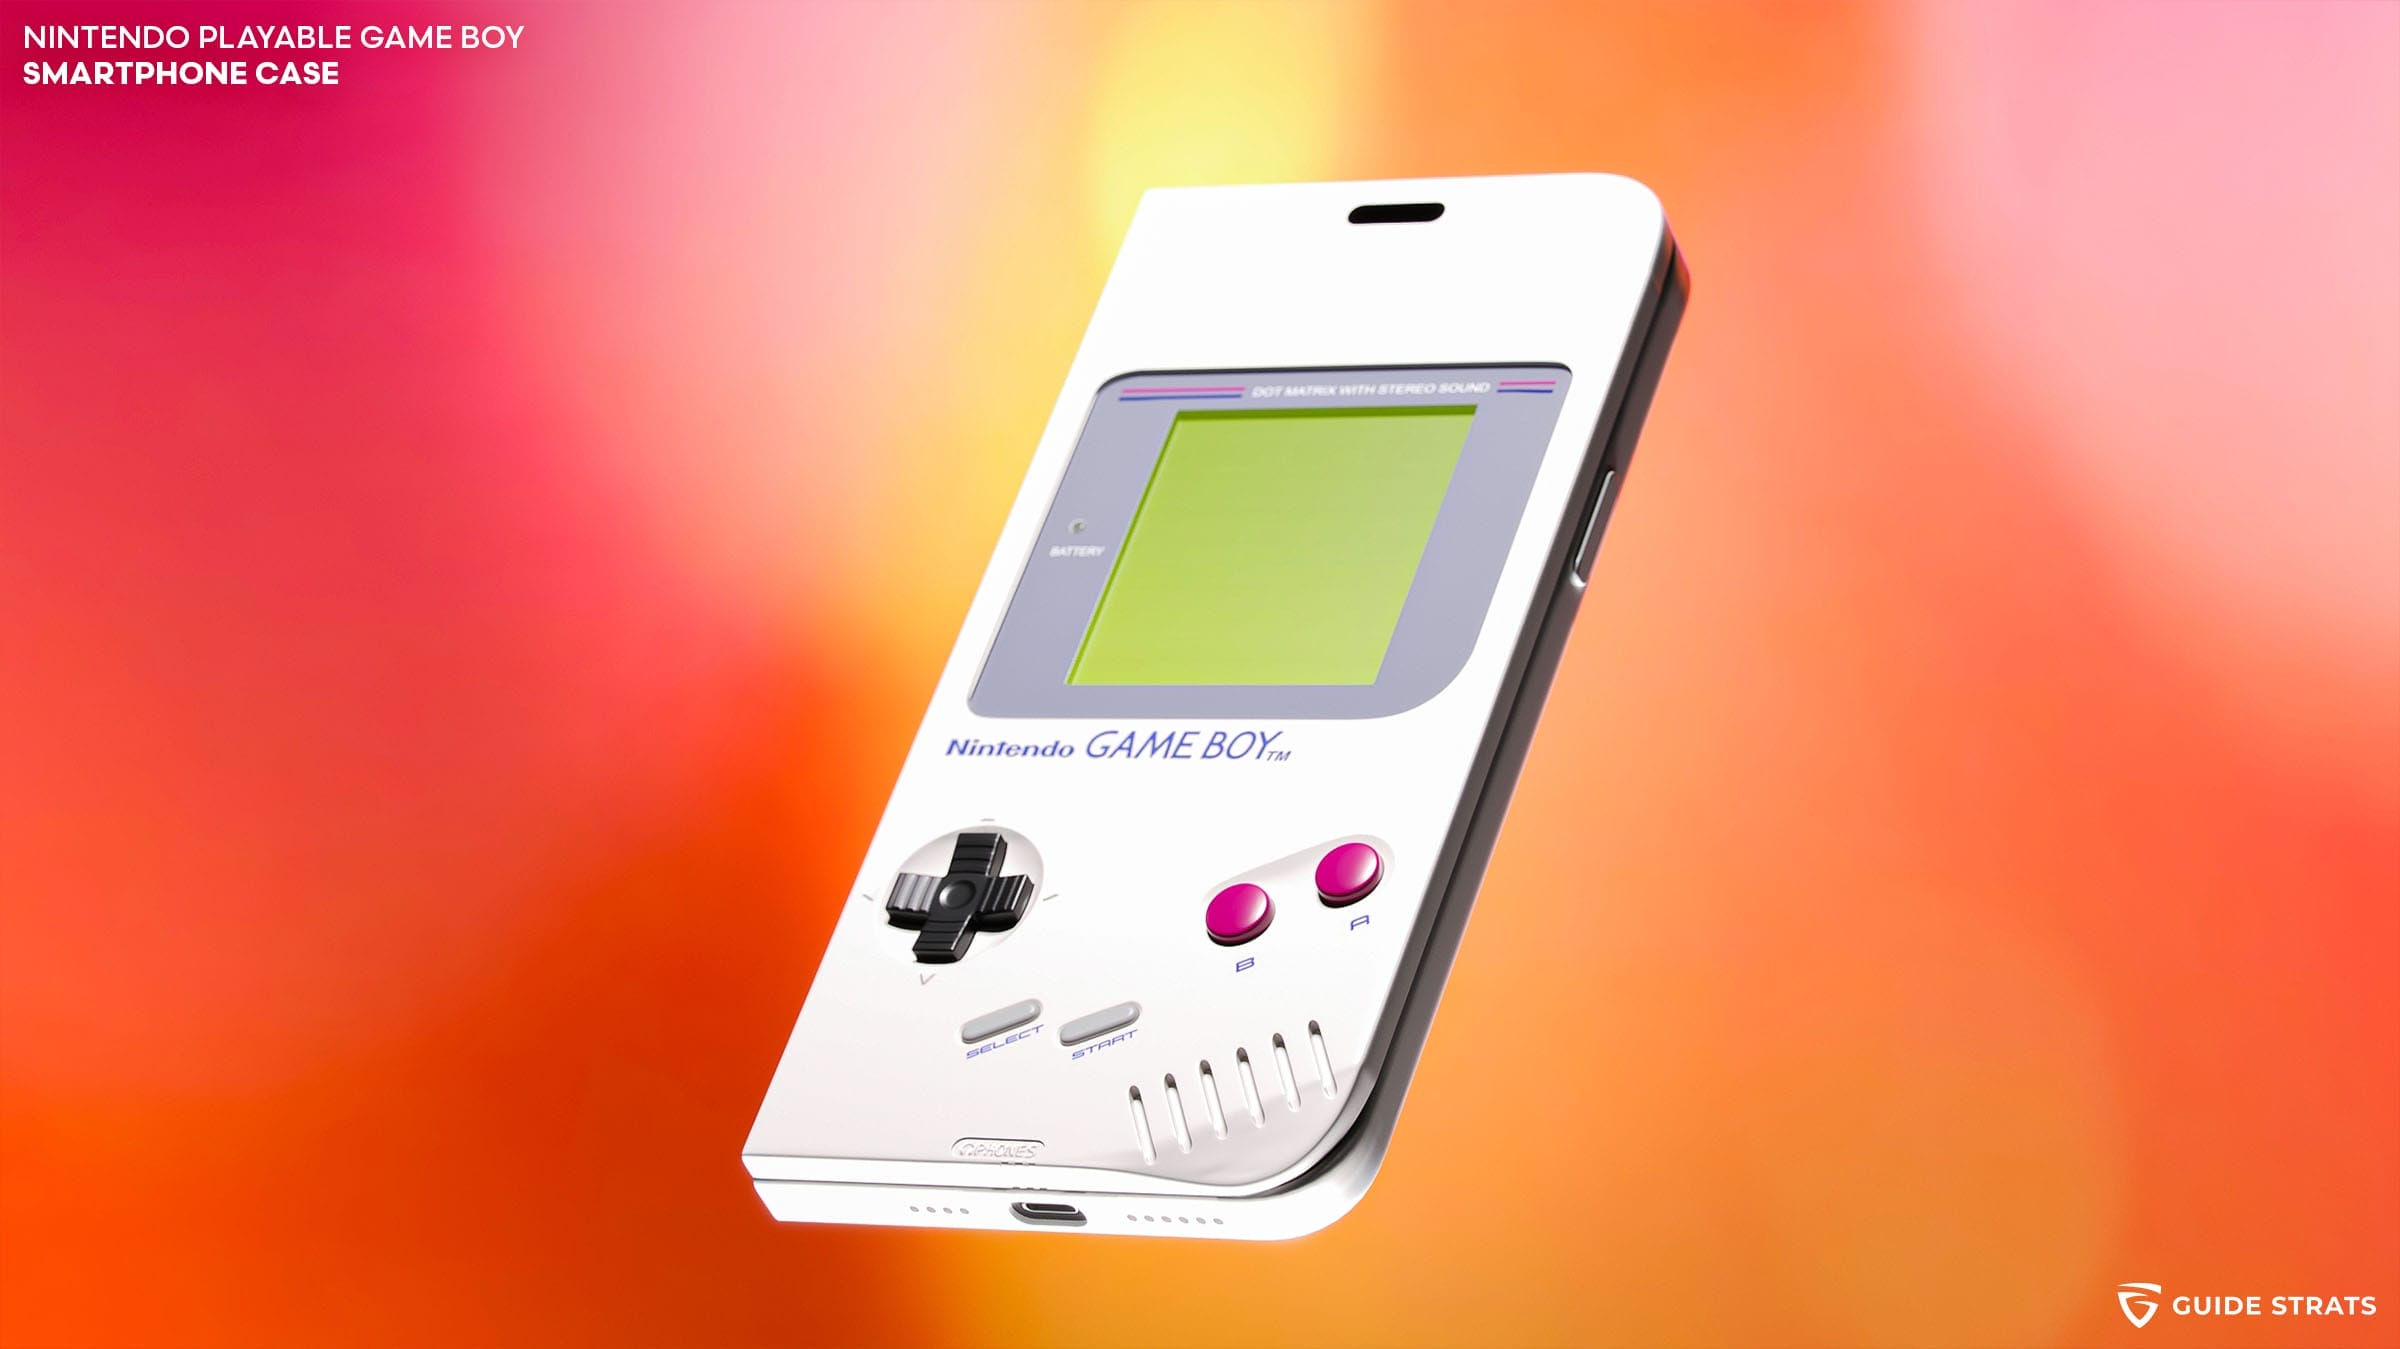 Nintendo Playable Game Boy Smartphone Case